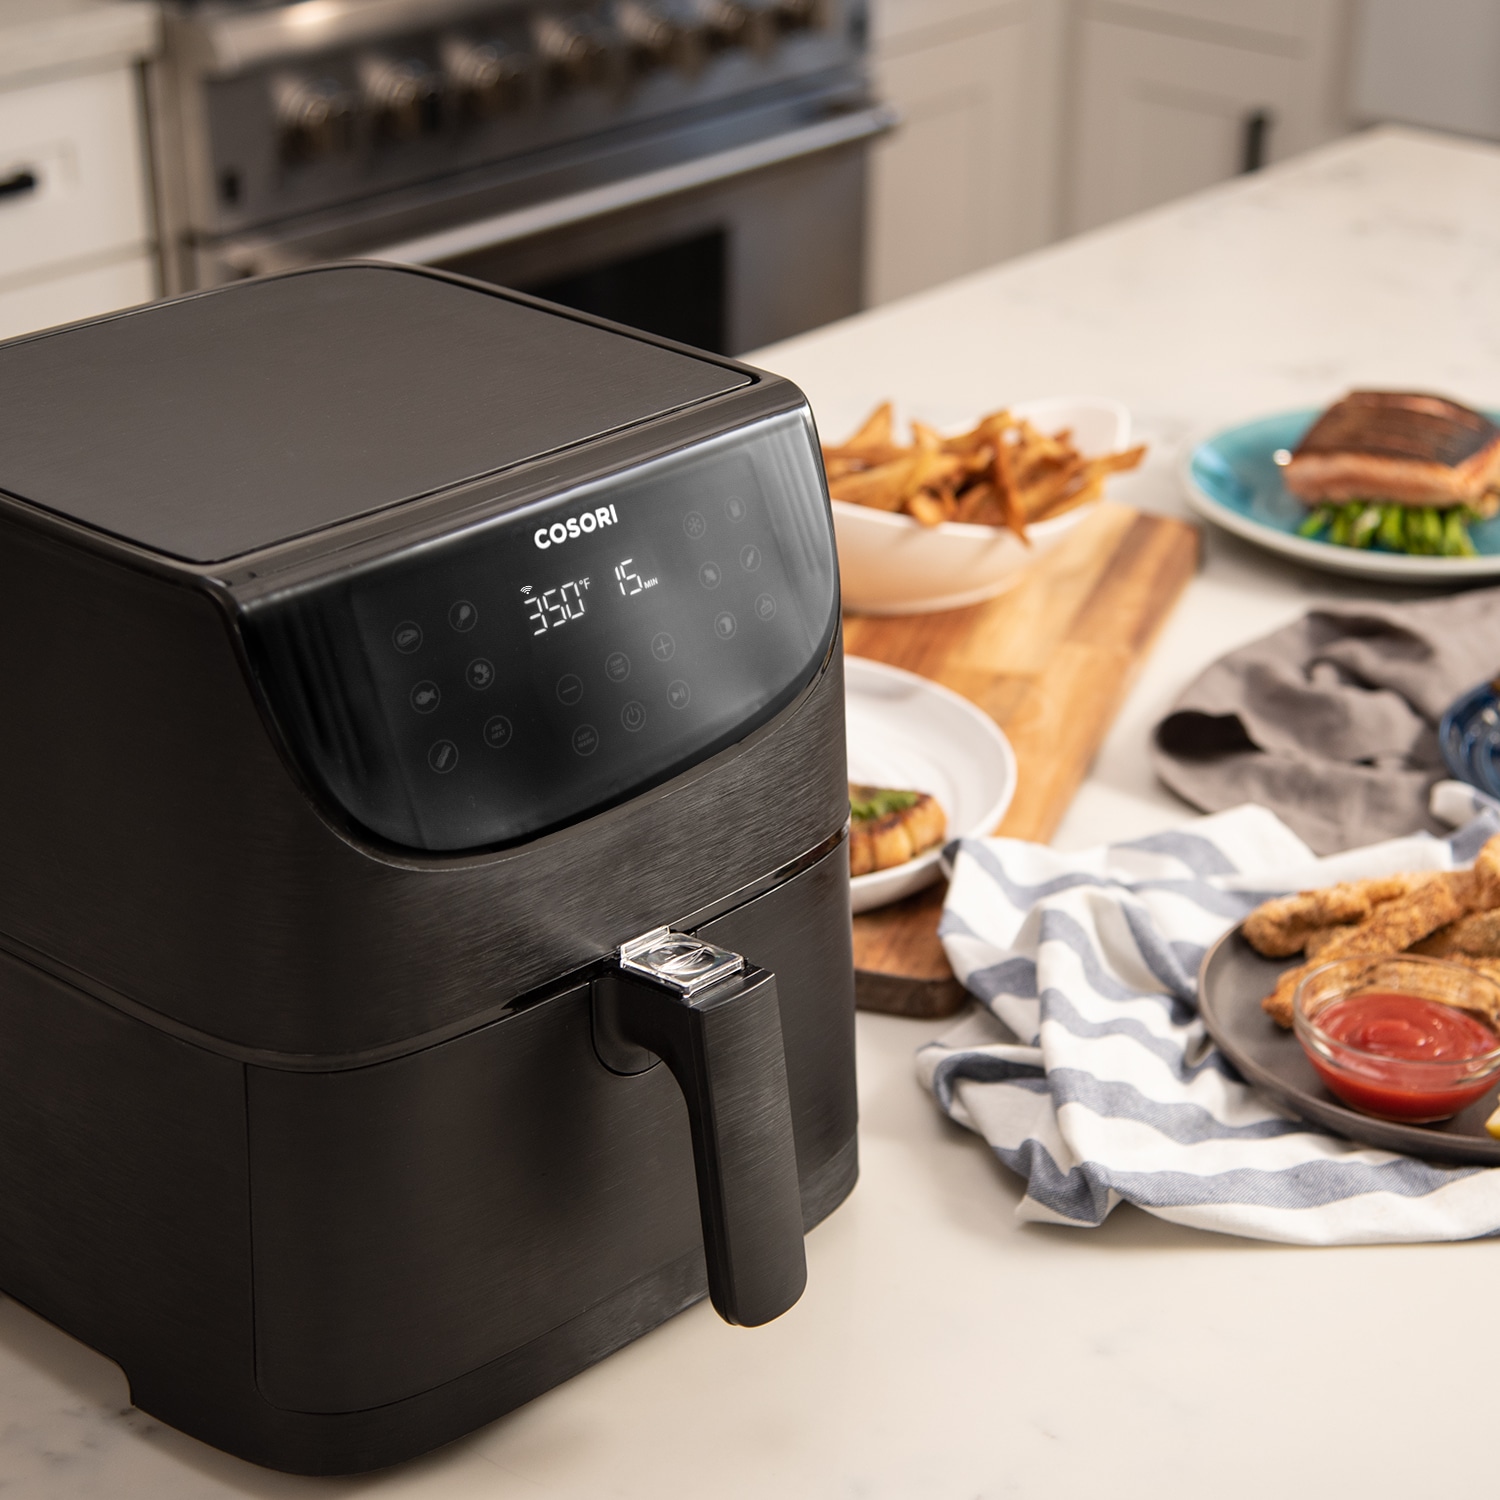 Consori 5.8-Quart Smart Air Fryer innovative gadgets